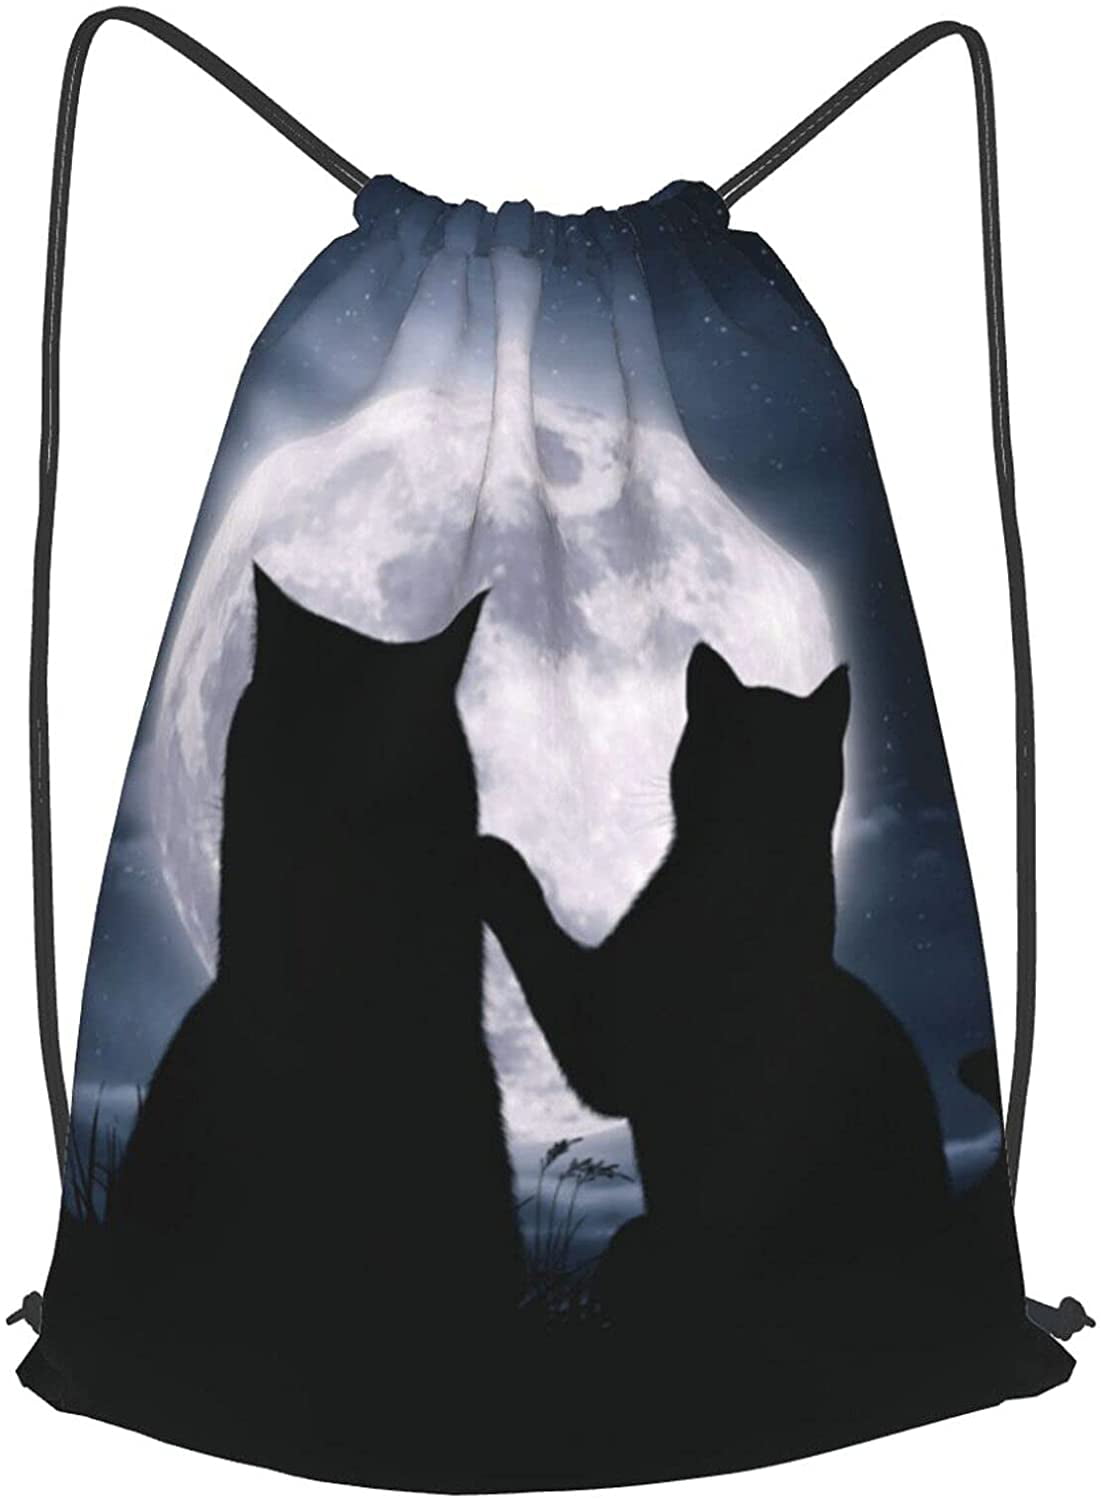 Reiki Black Cat Drawstring Bag Waterproof Gym Backpack Storage Sackpack For Outdoor Hiking Travel Sport Unisex 